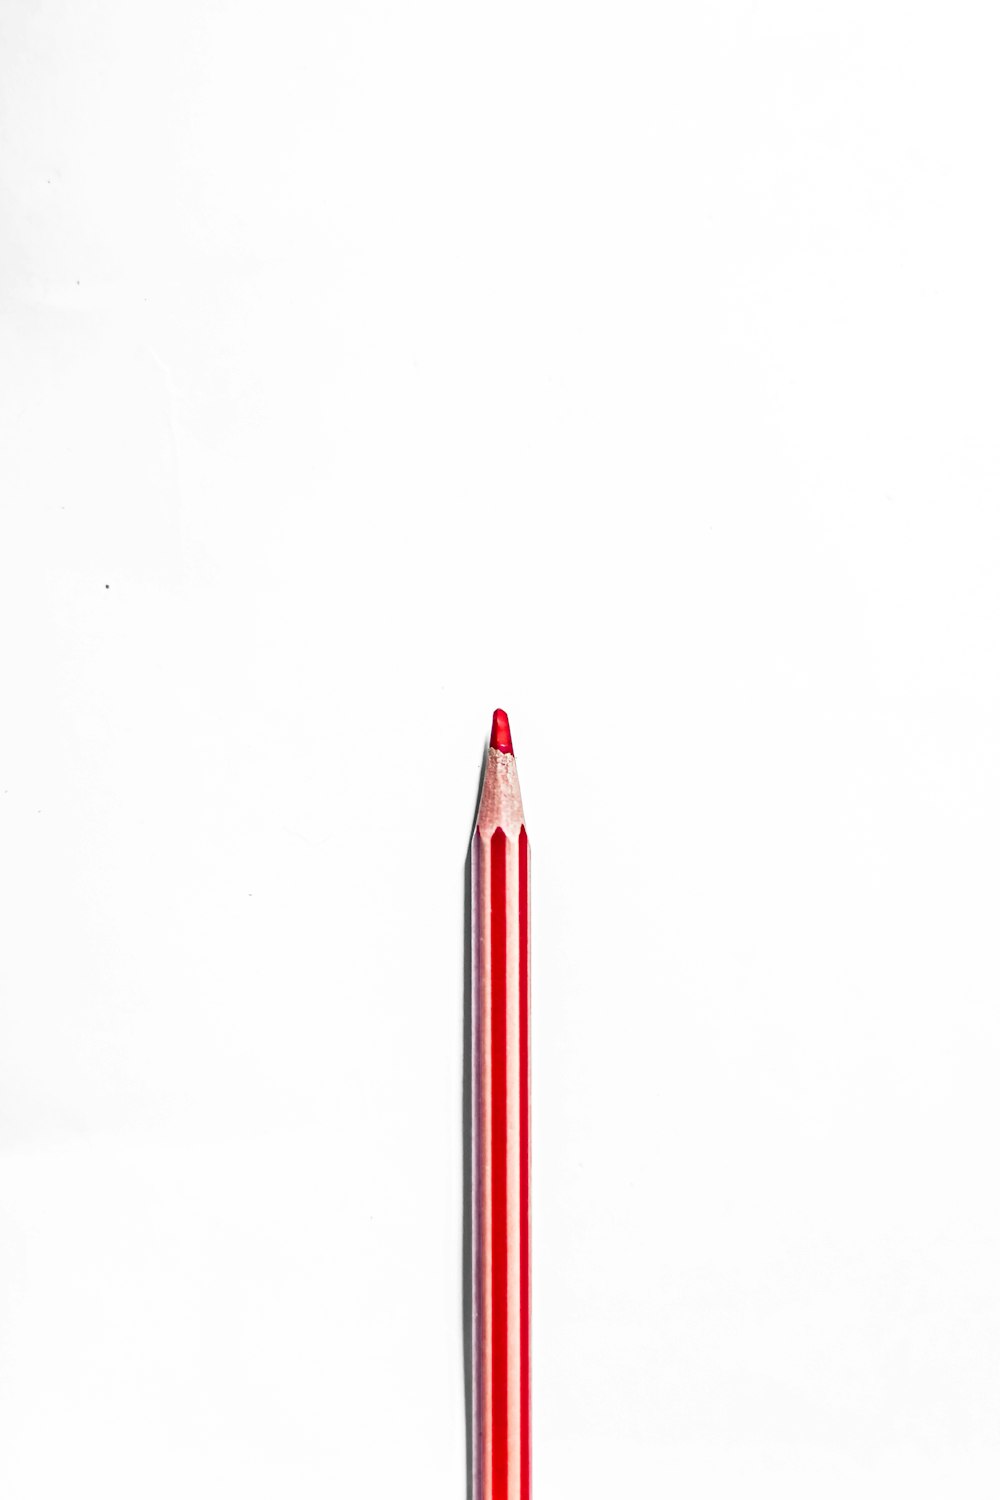 matita rossa e bianca su superficie bianca